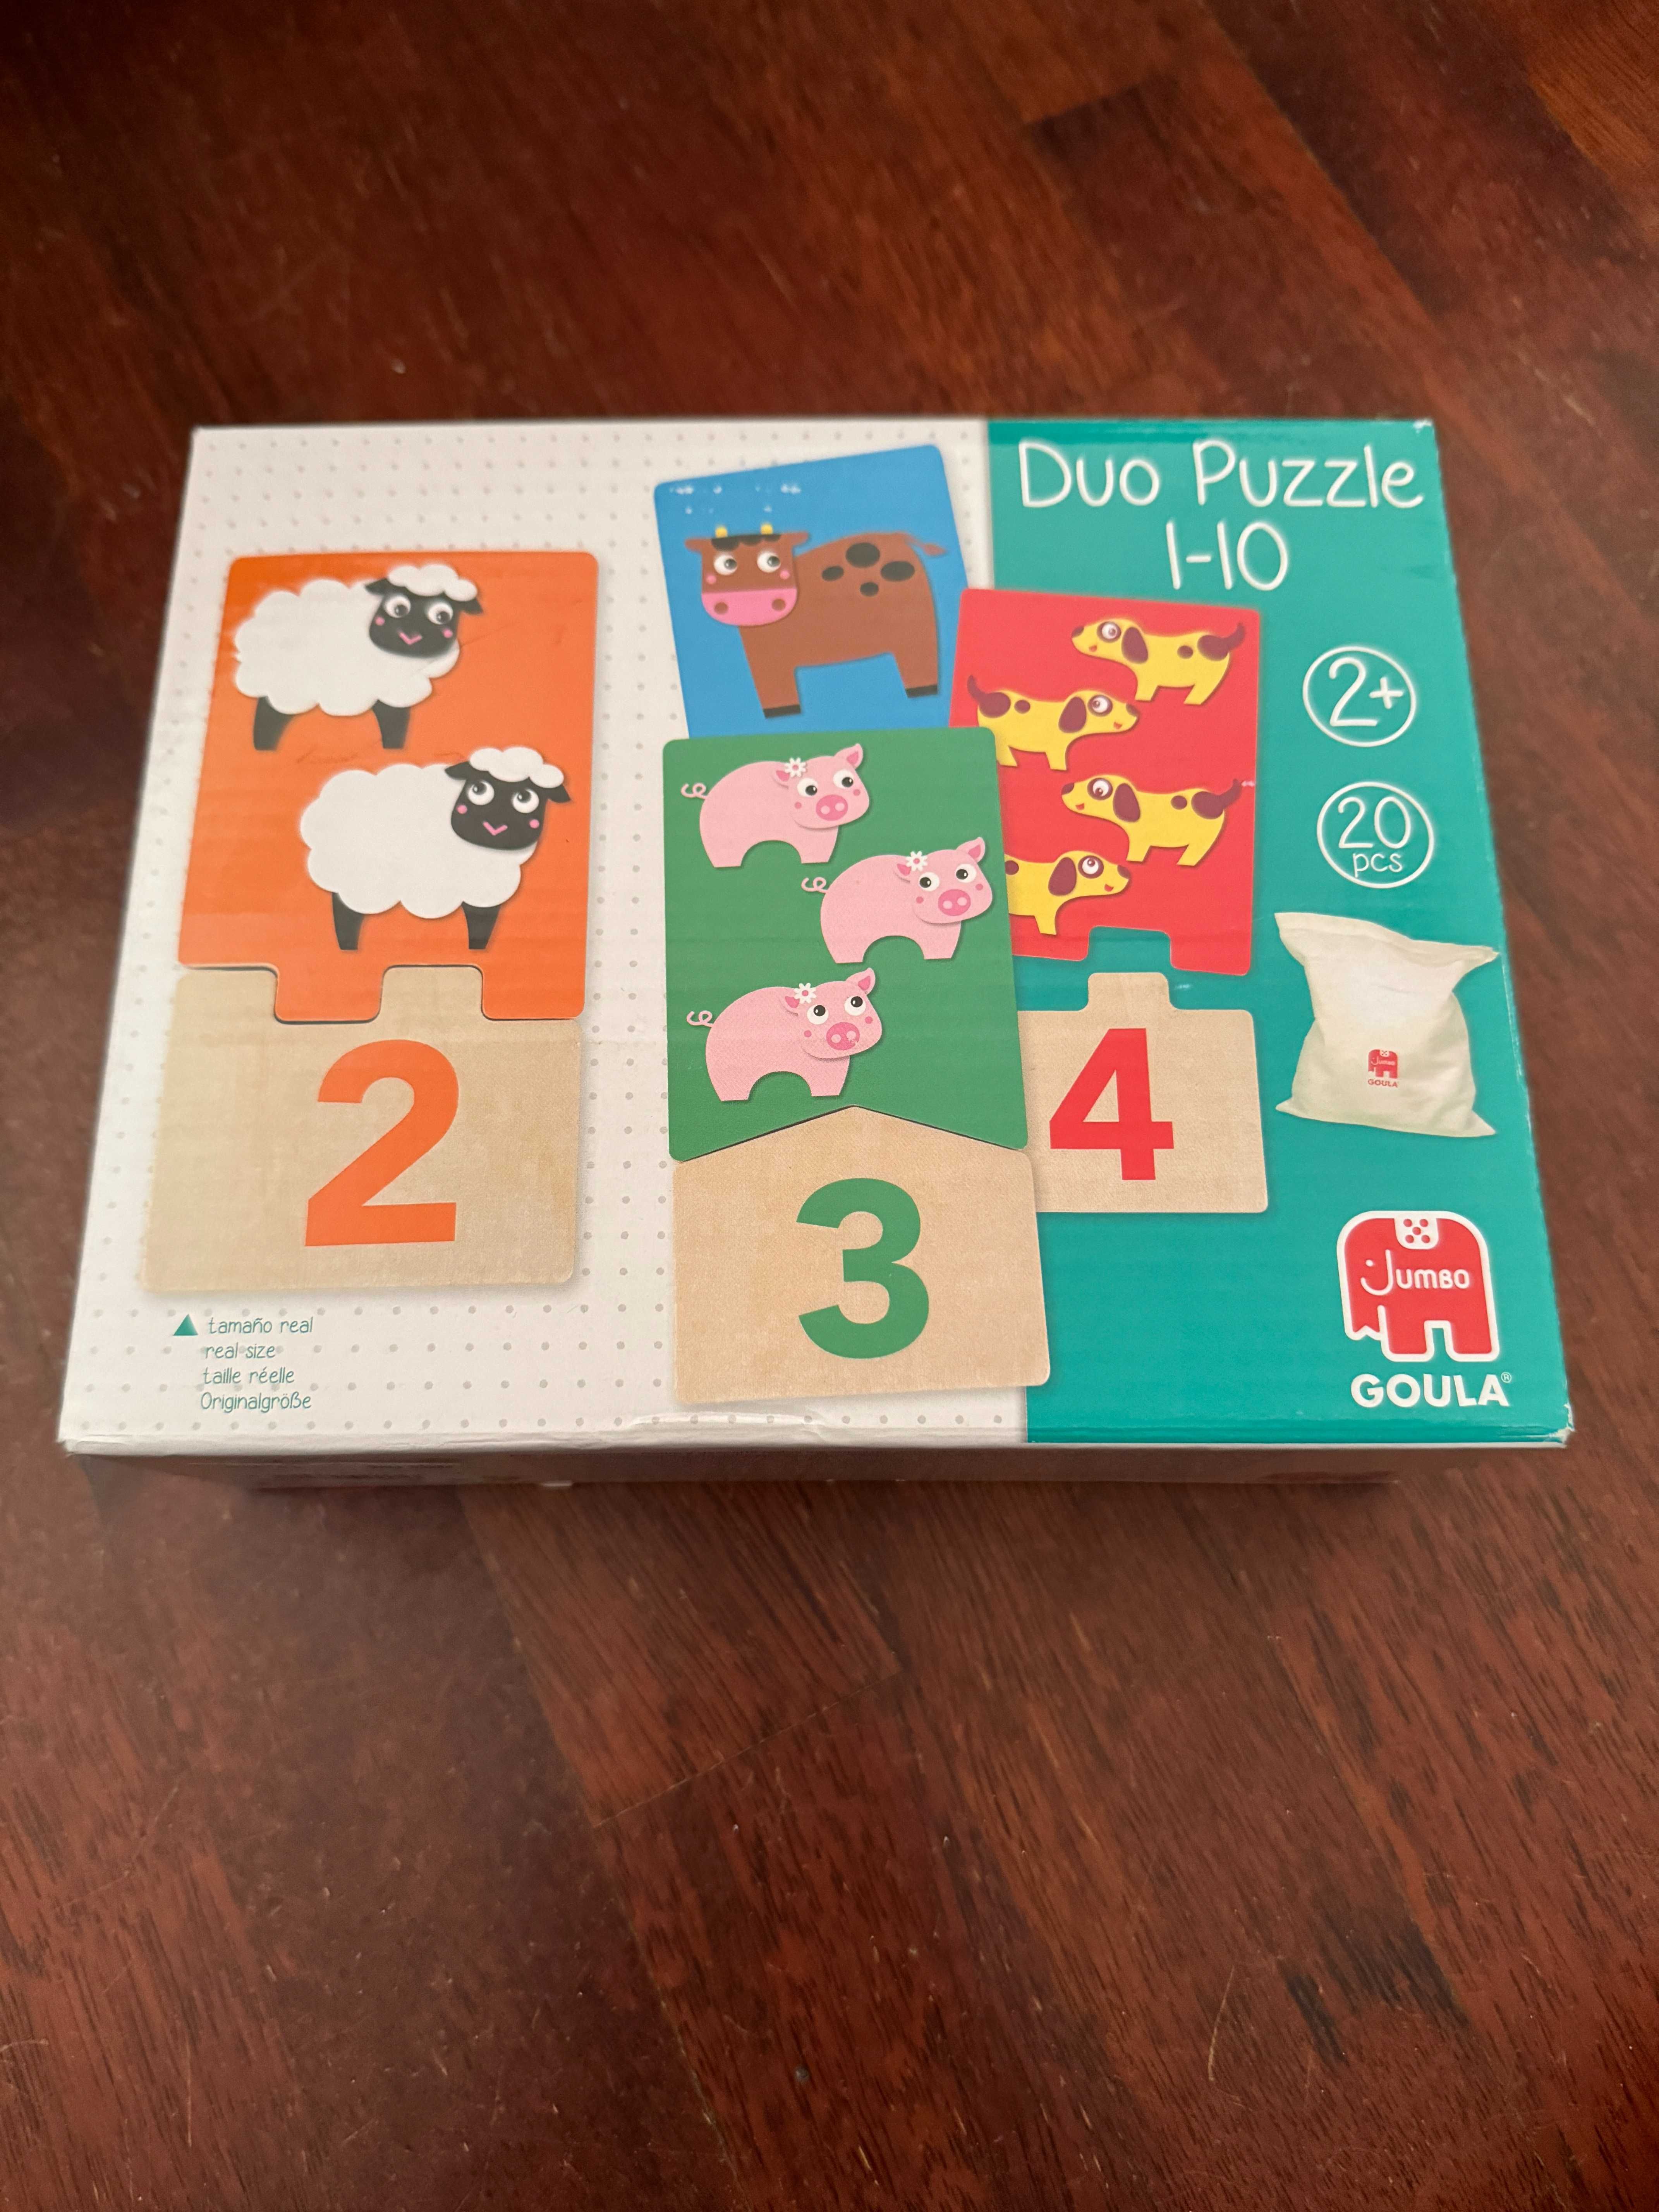 Puzzle duo 1-10 Goula